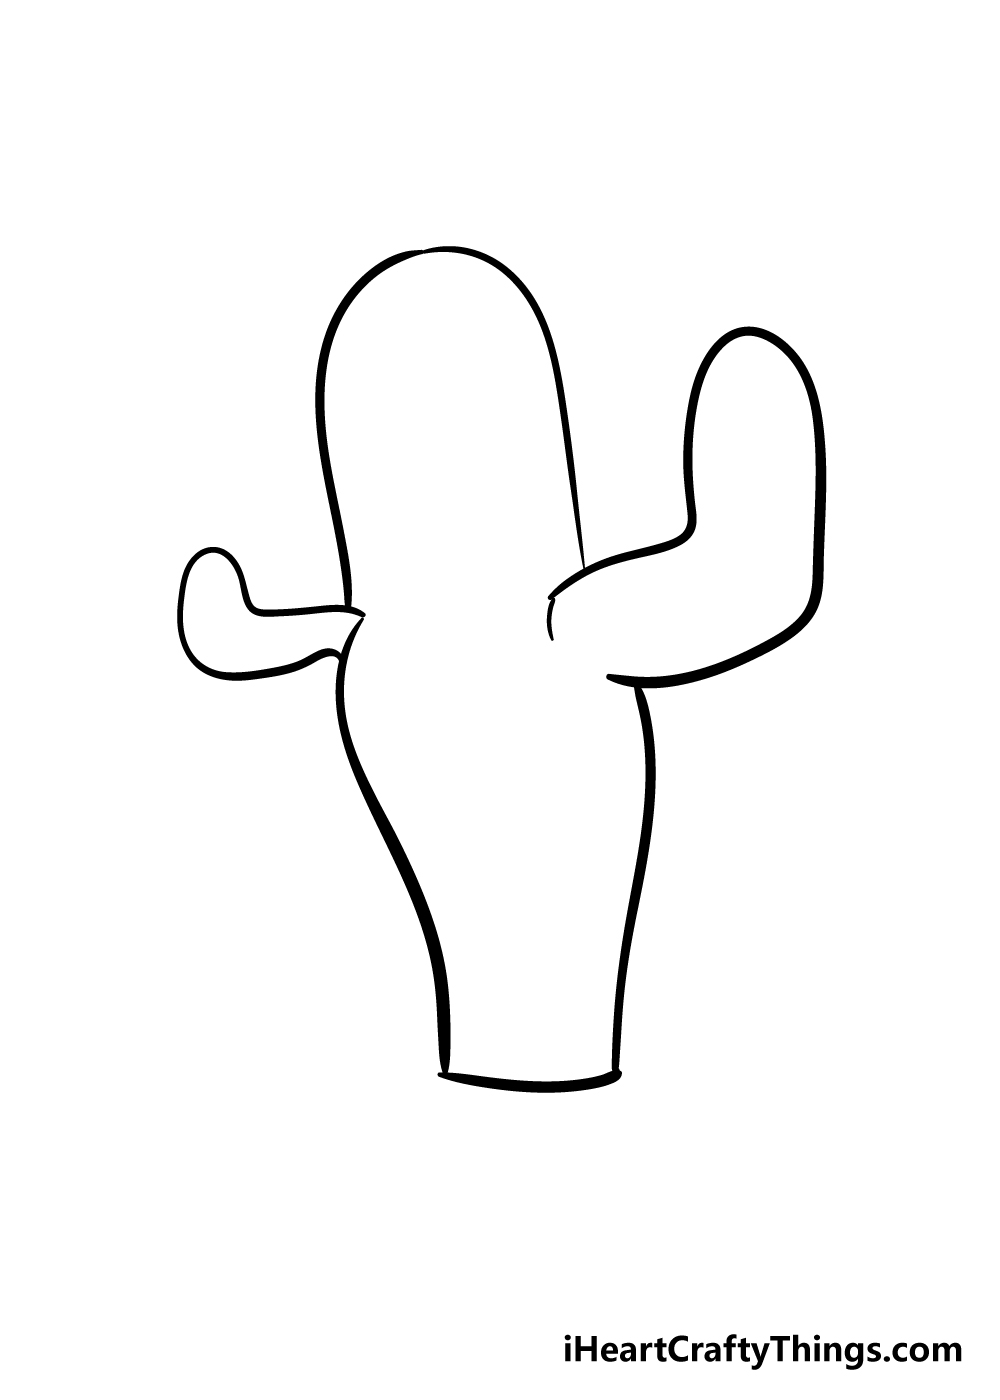 cactus drawing step 3